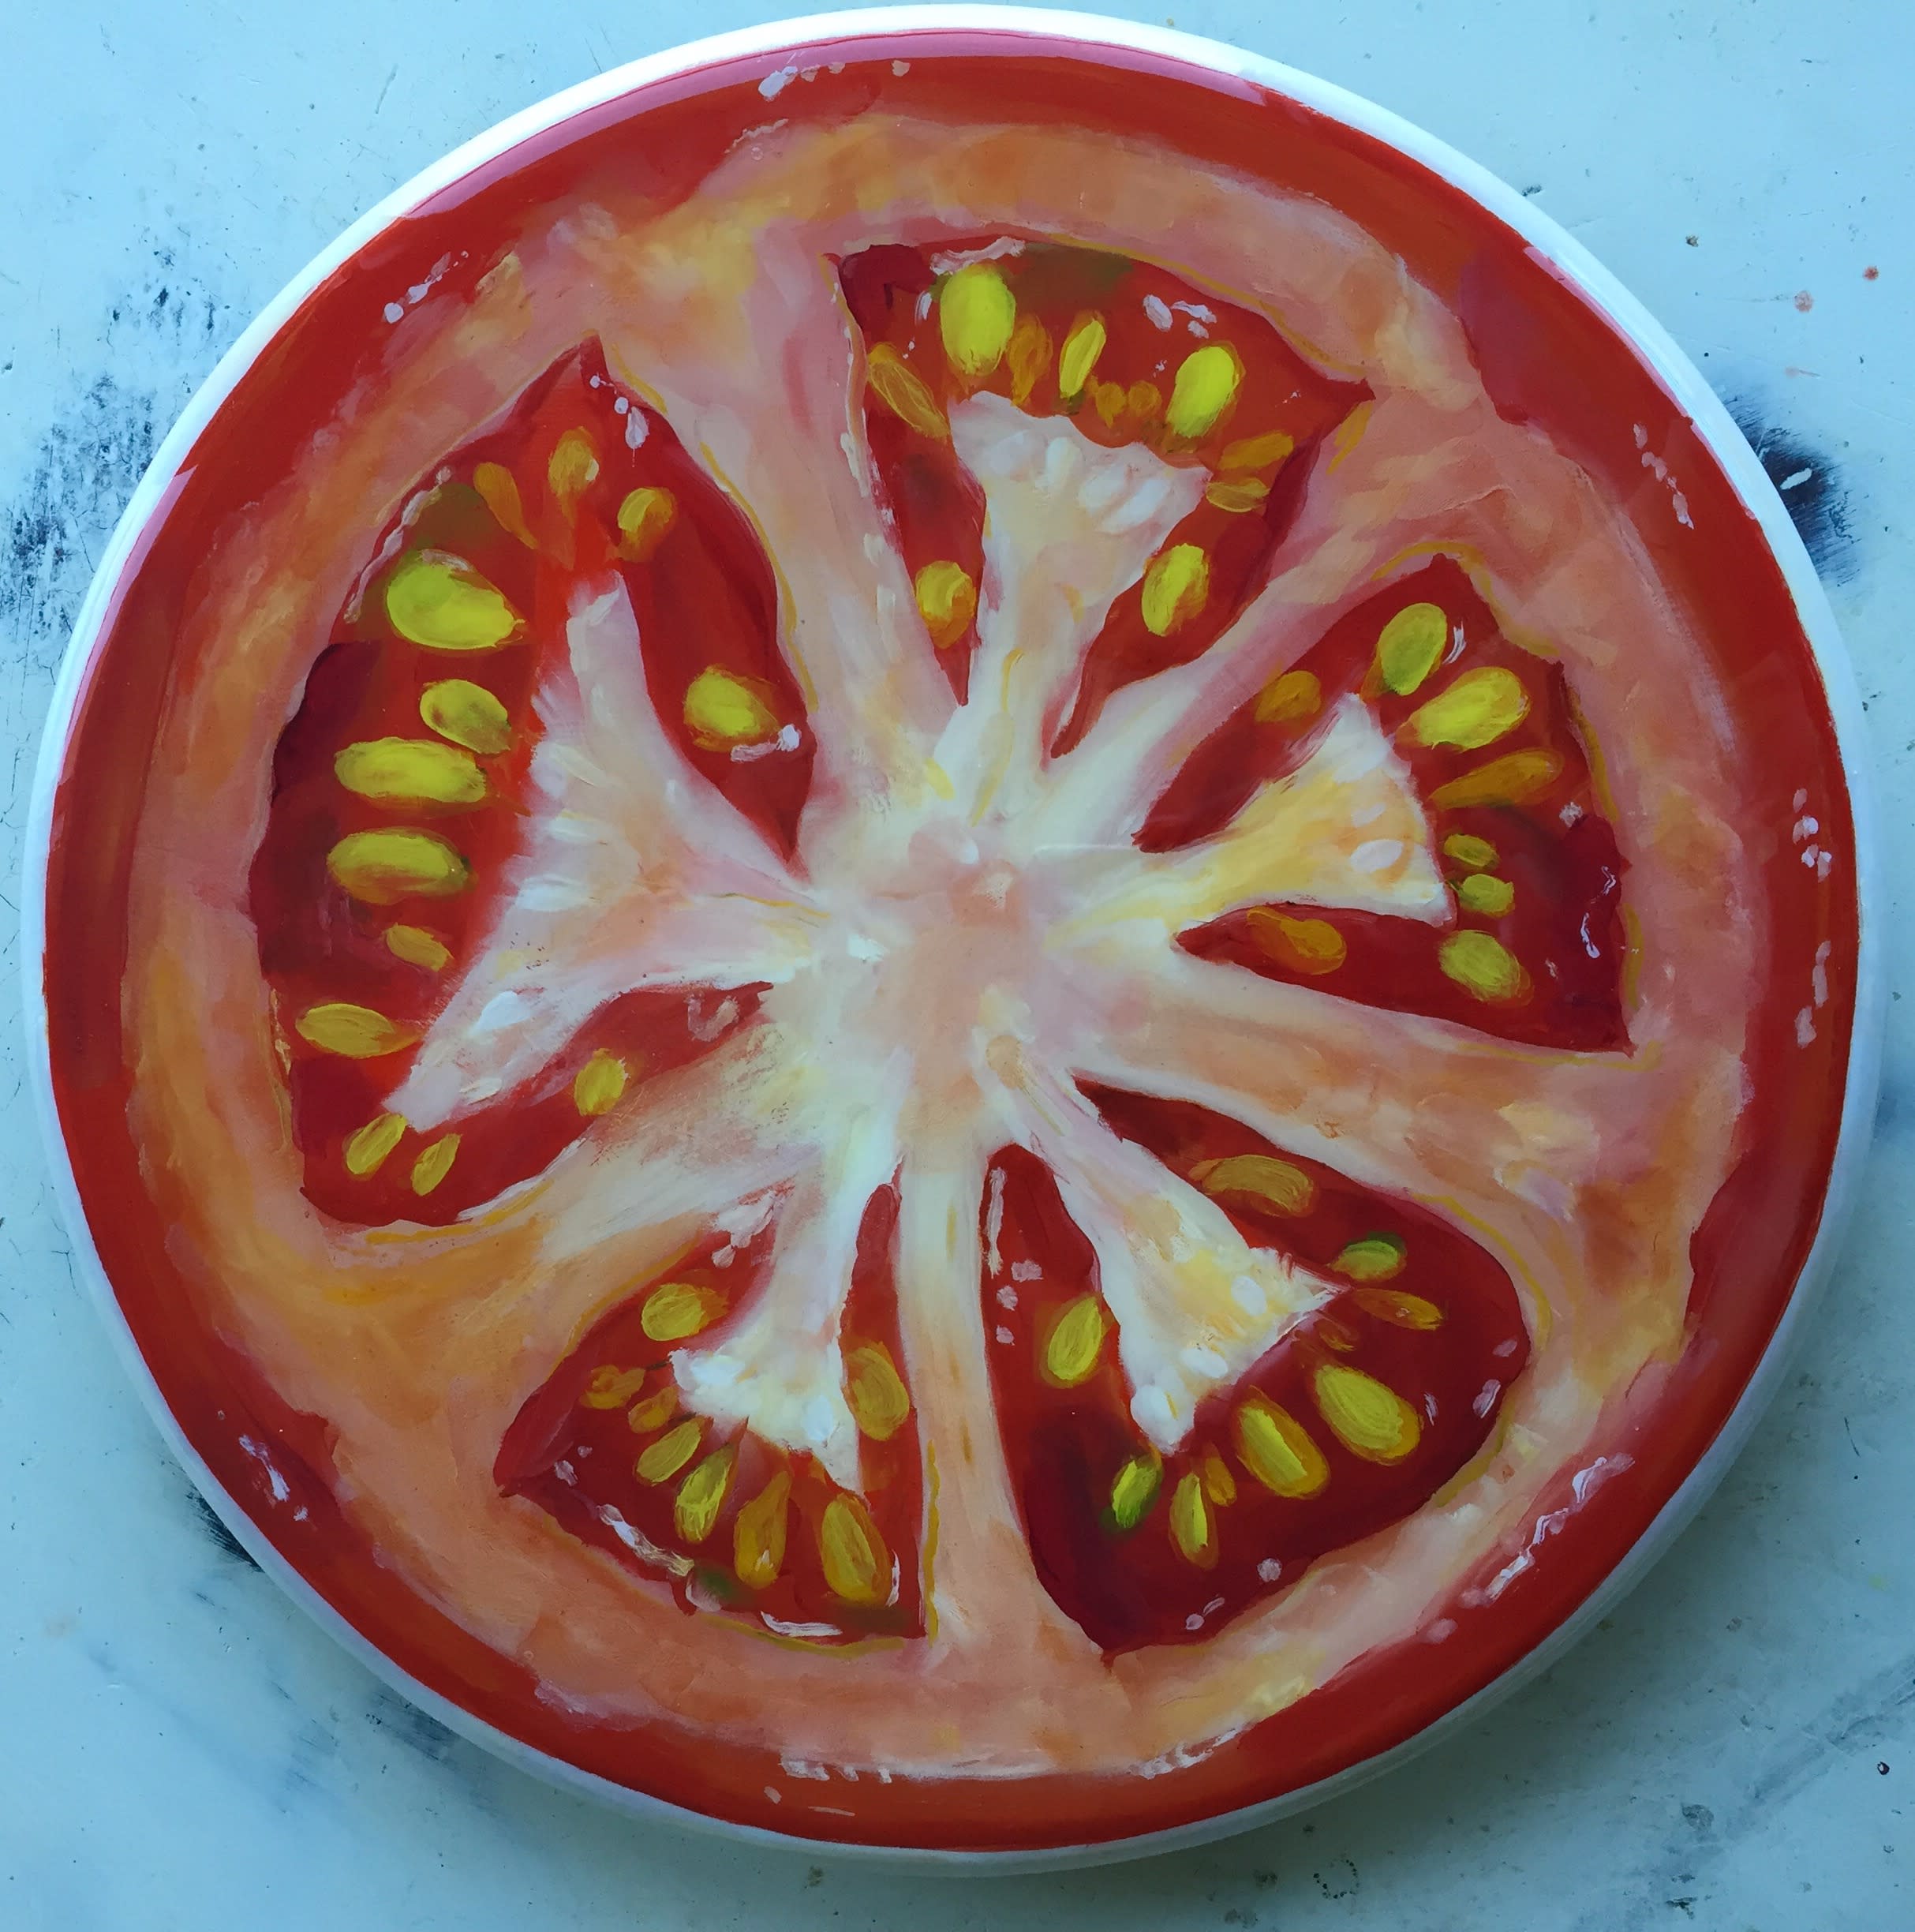 Lazy susan tomato slice 14 d2hrdb